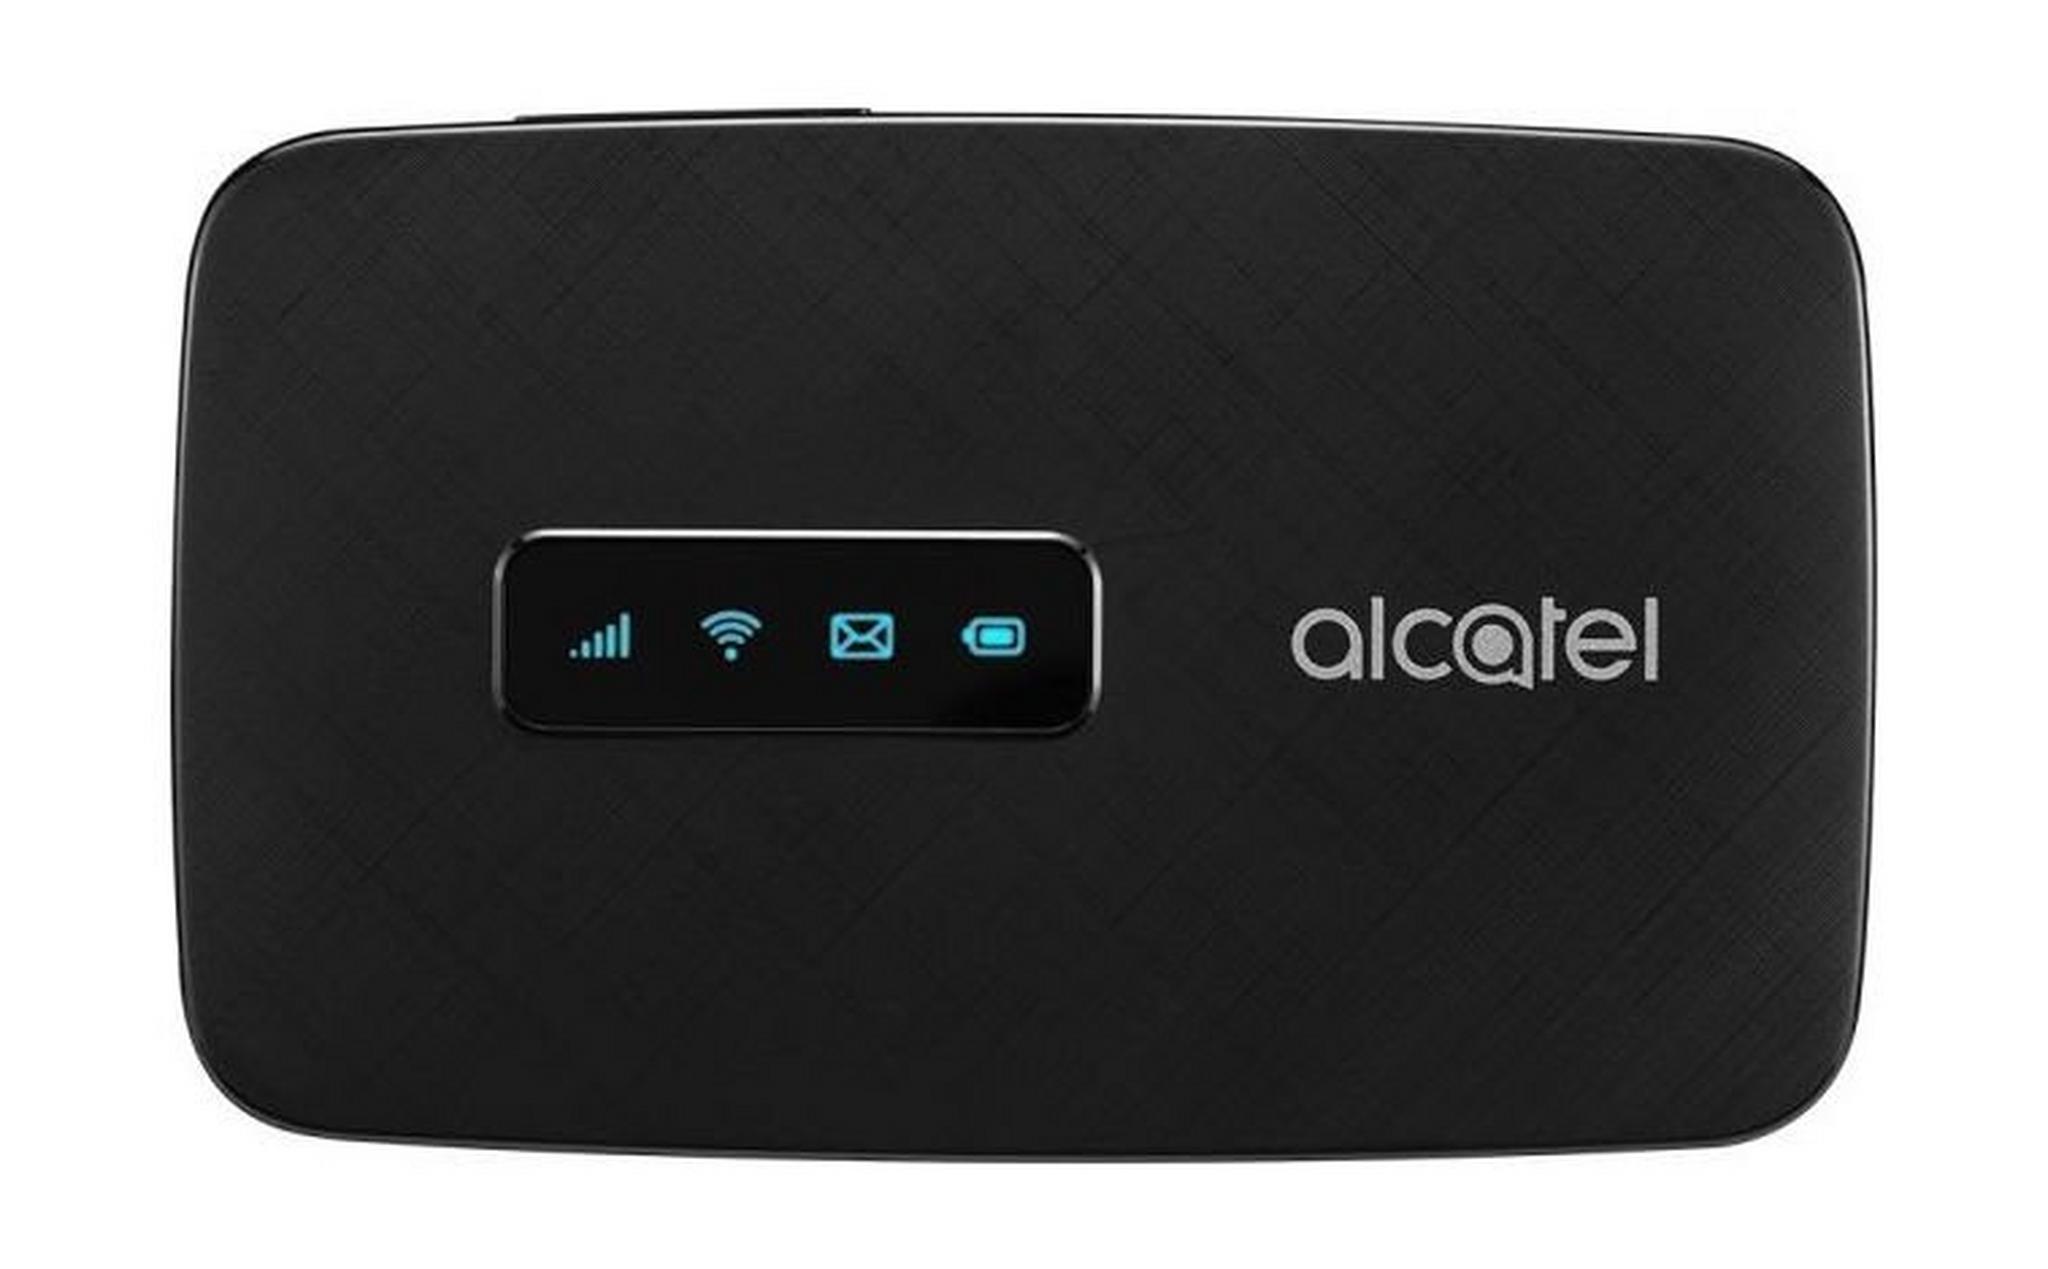 Alcatel LinkZone 4G LTE Wireless Router - Black